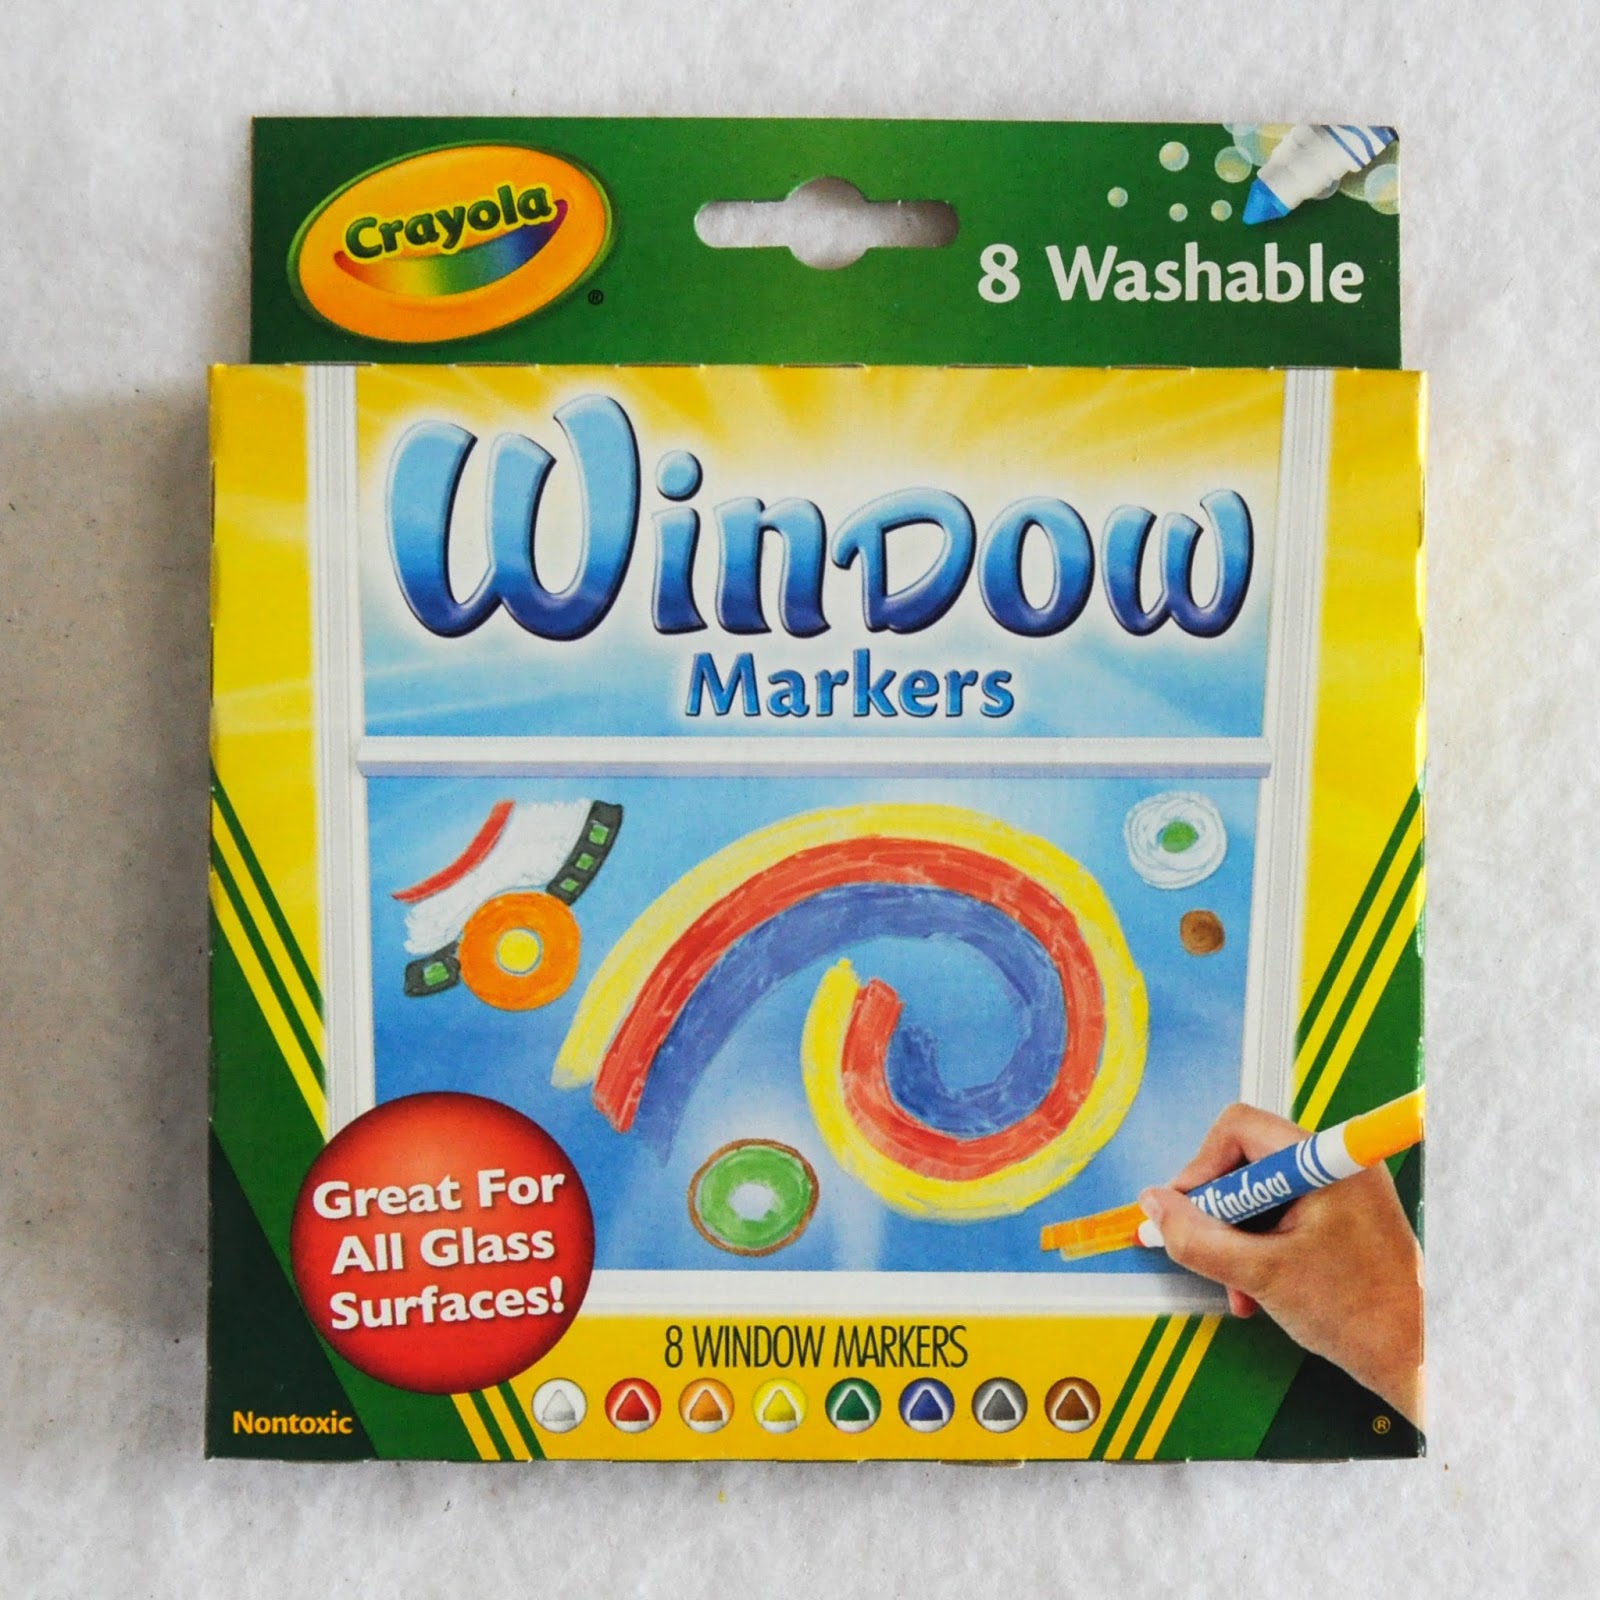 Crayola Window Markers Reviews –